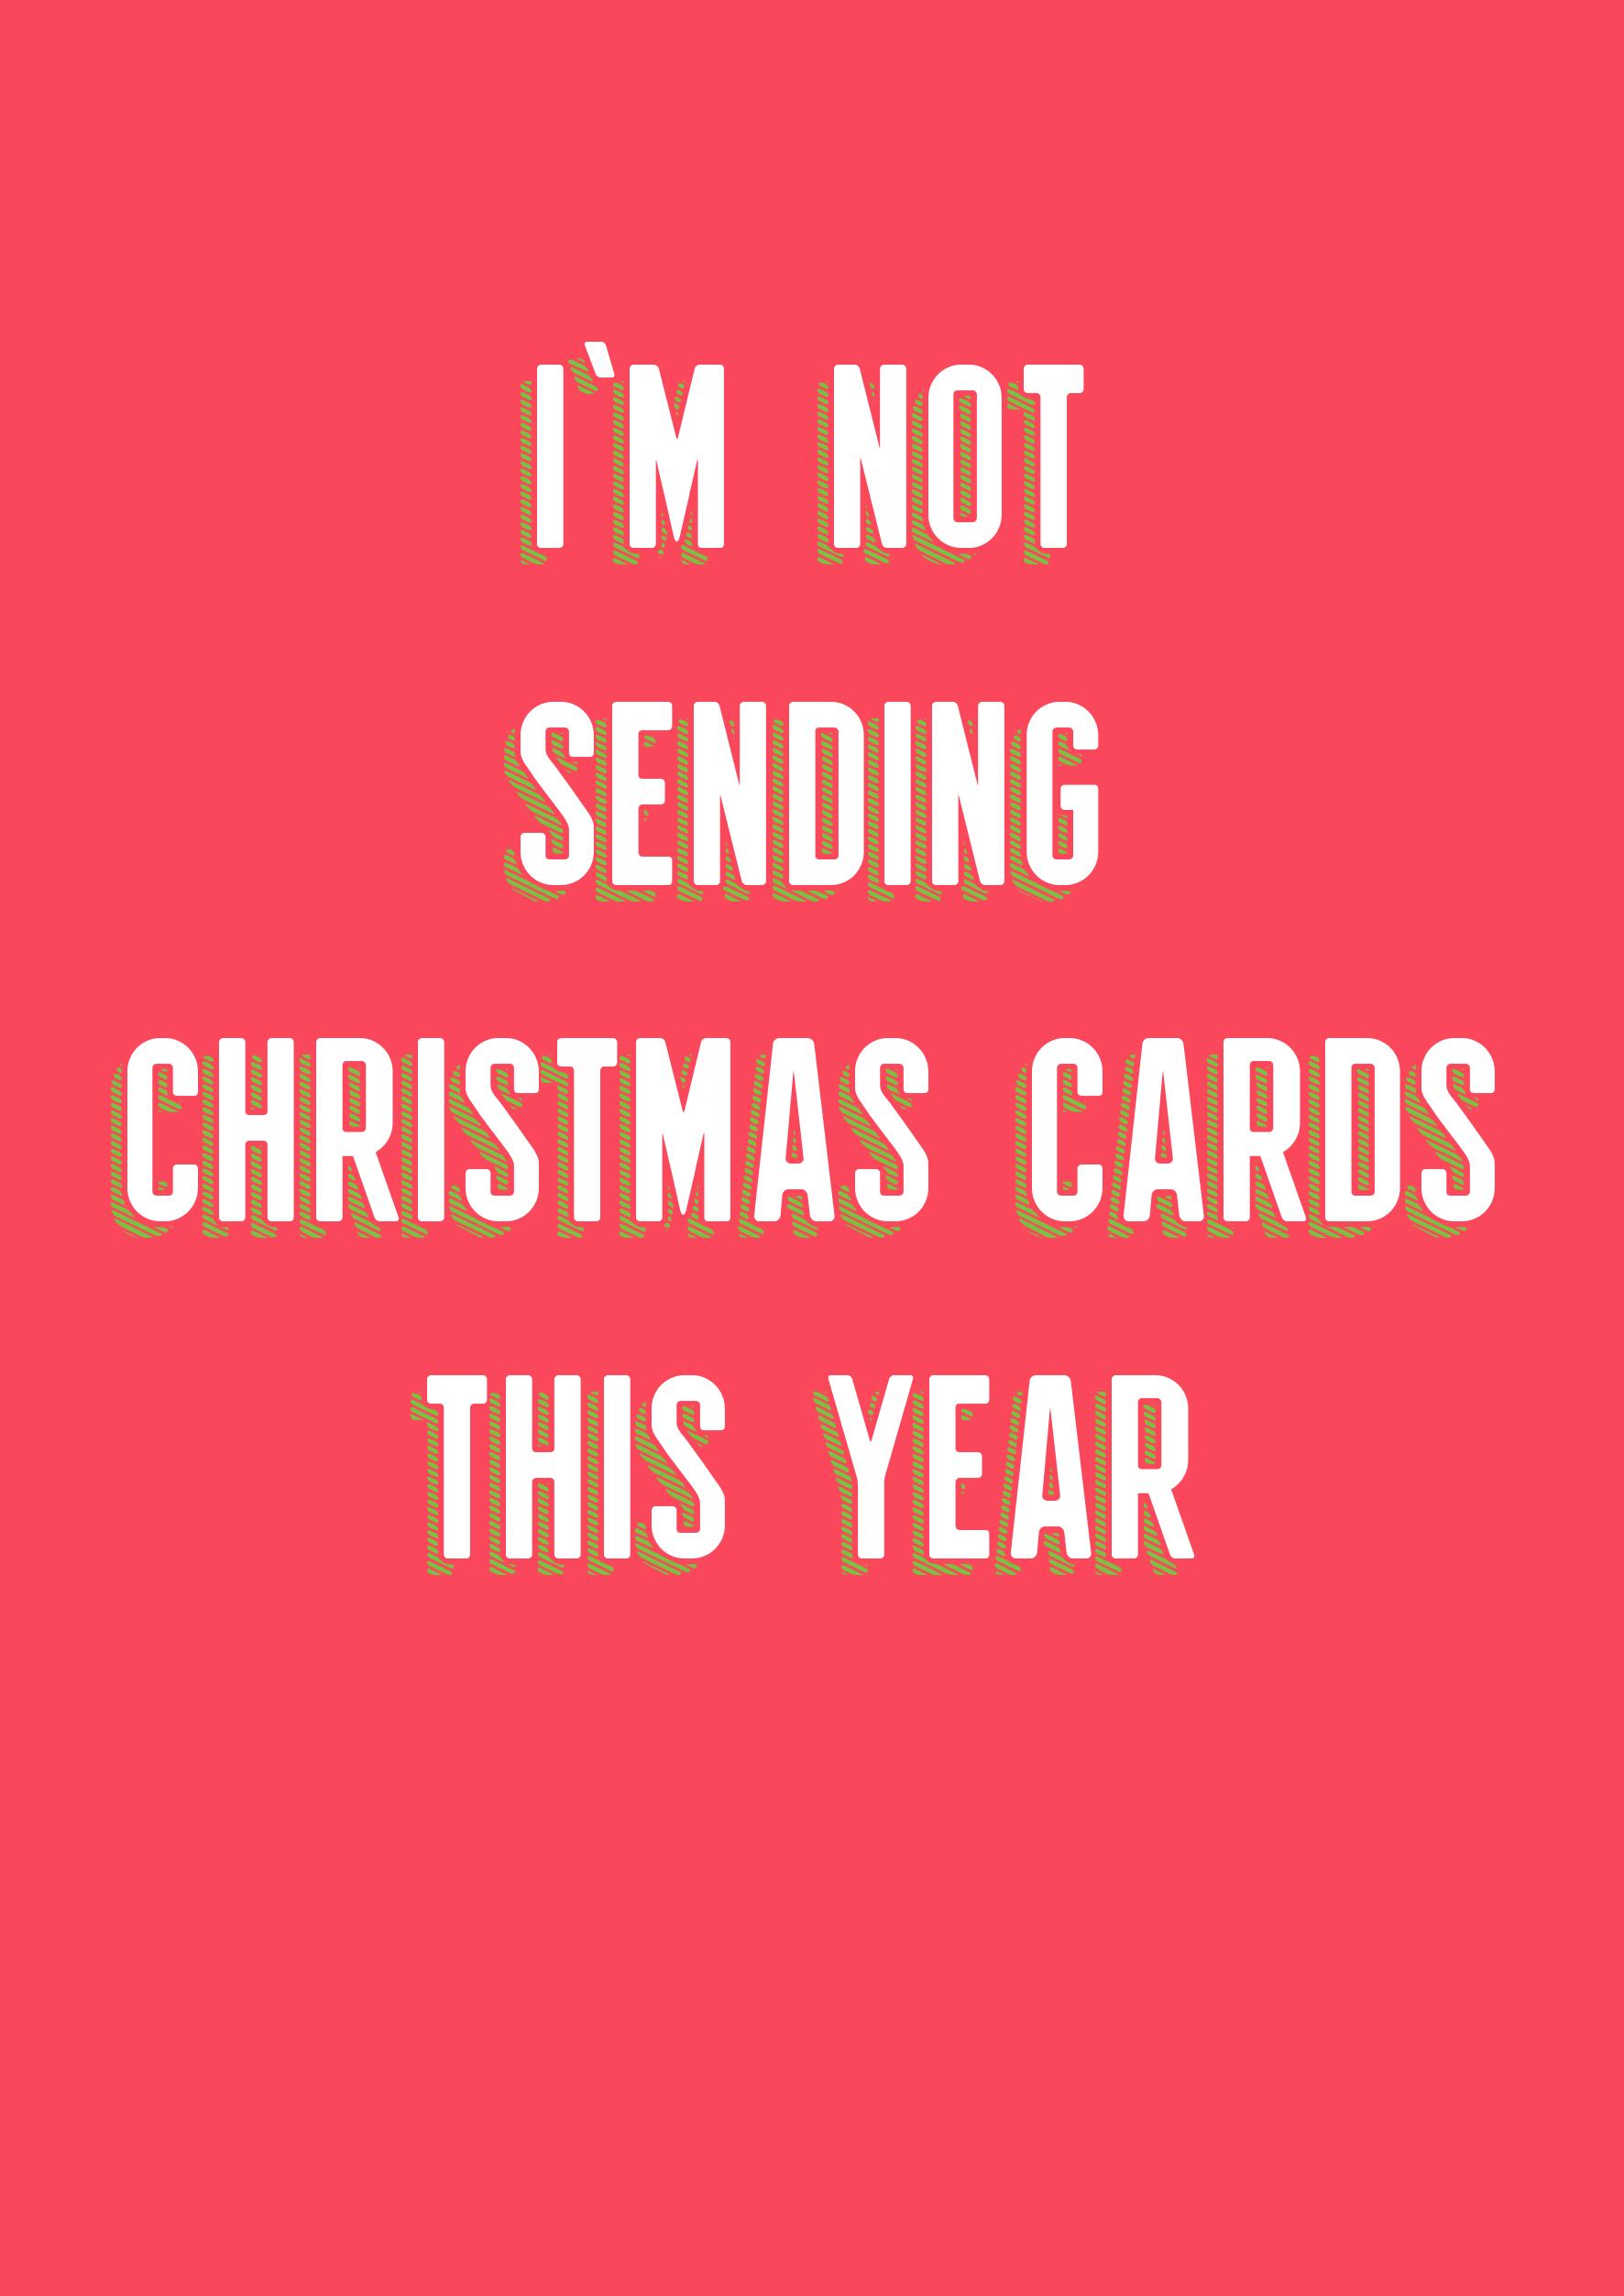 not sending this year